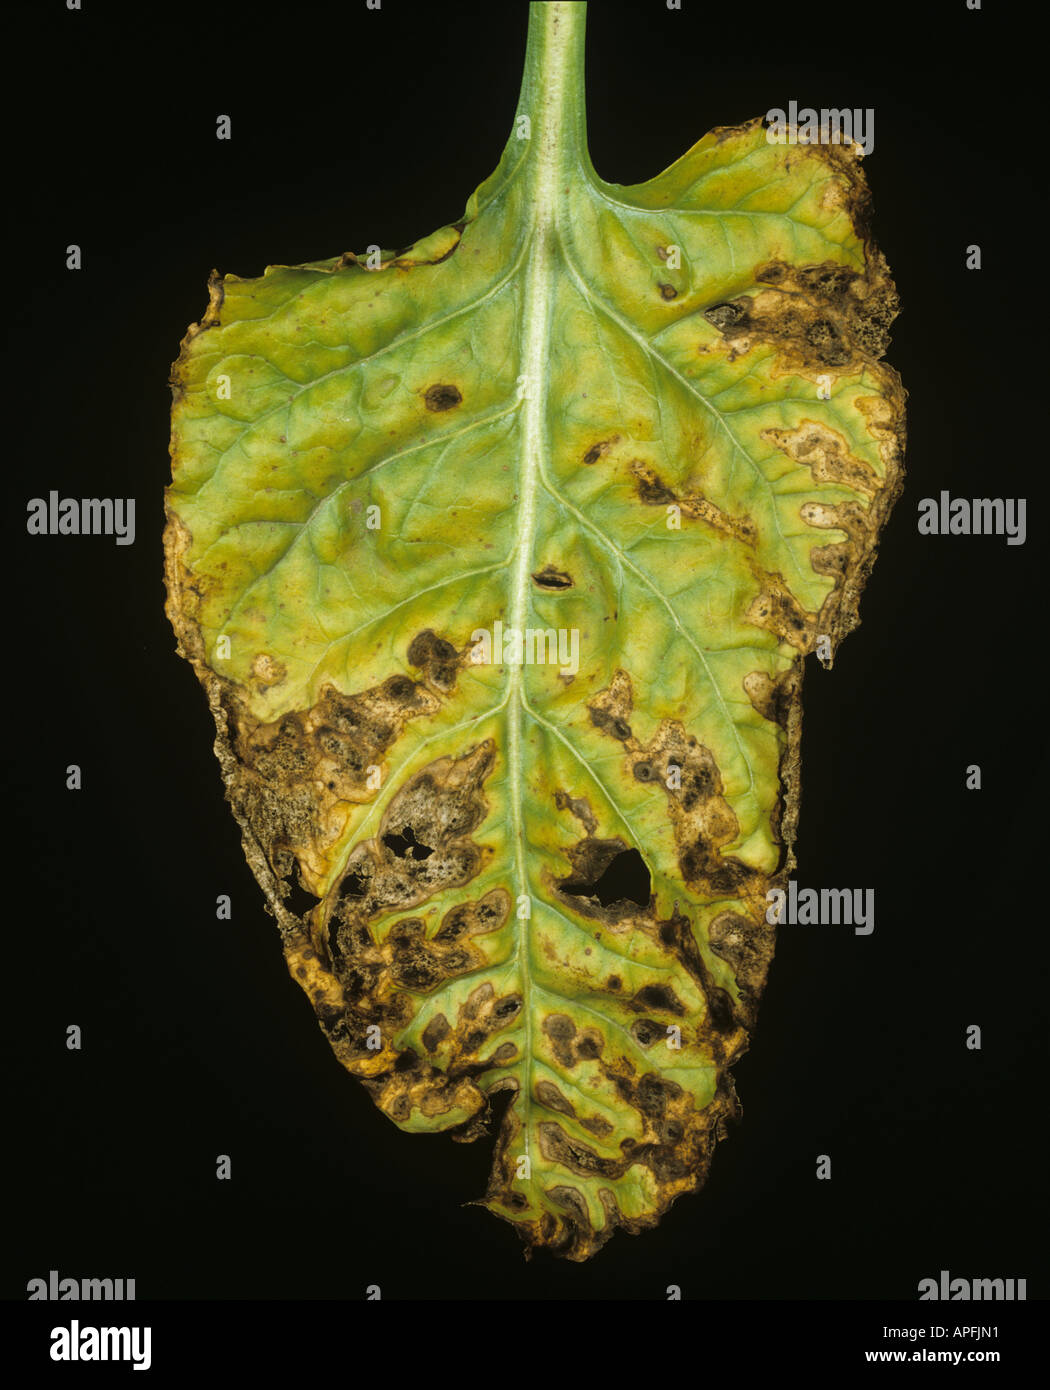 Alternaria leaf spot Alternaria tenuis lesions of weak pathogen on sugar beet leaf Stock Photo